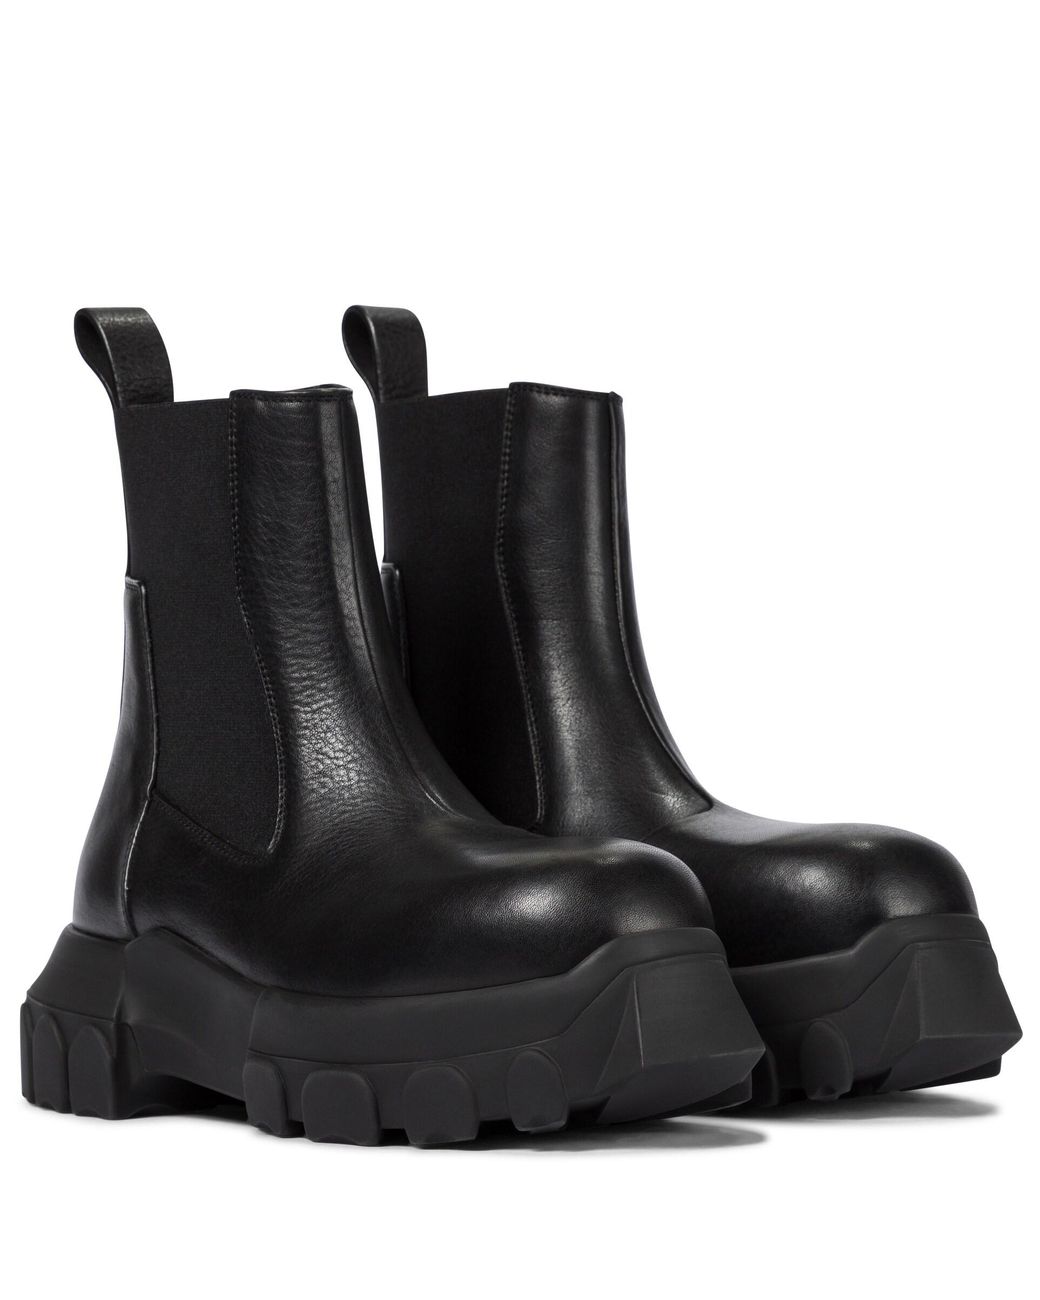 Rick Owens Beatle Bozo Leather Chelsea Boots in Black/Black (Black) | Lyst